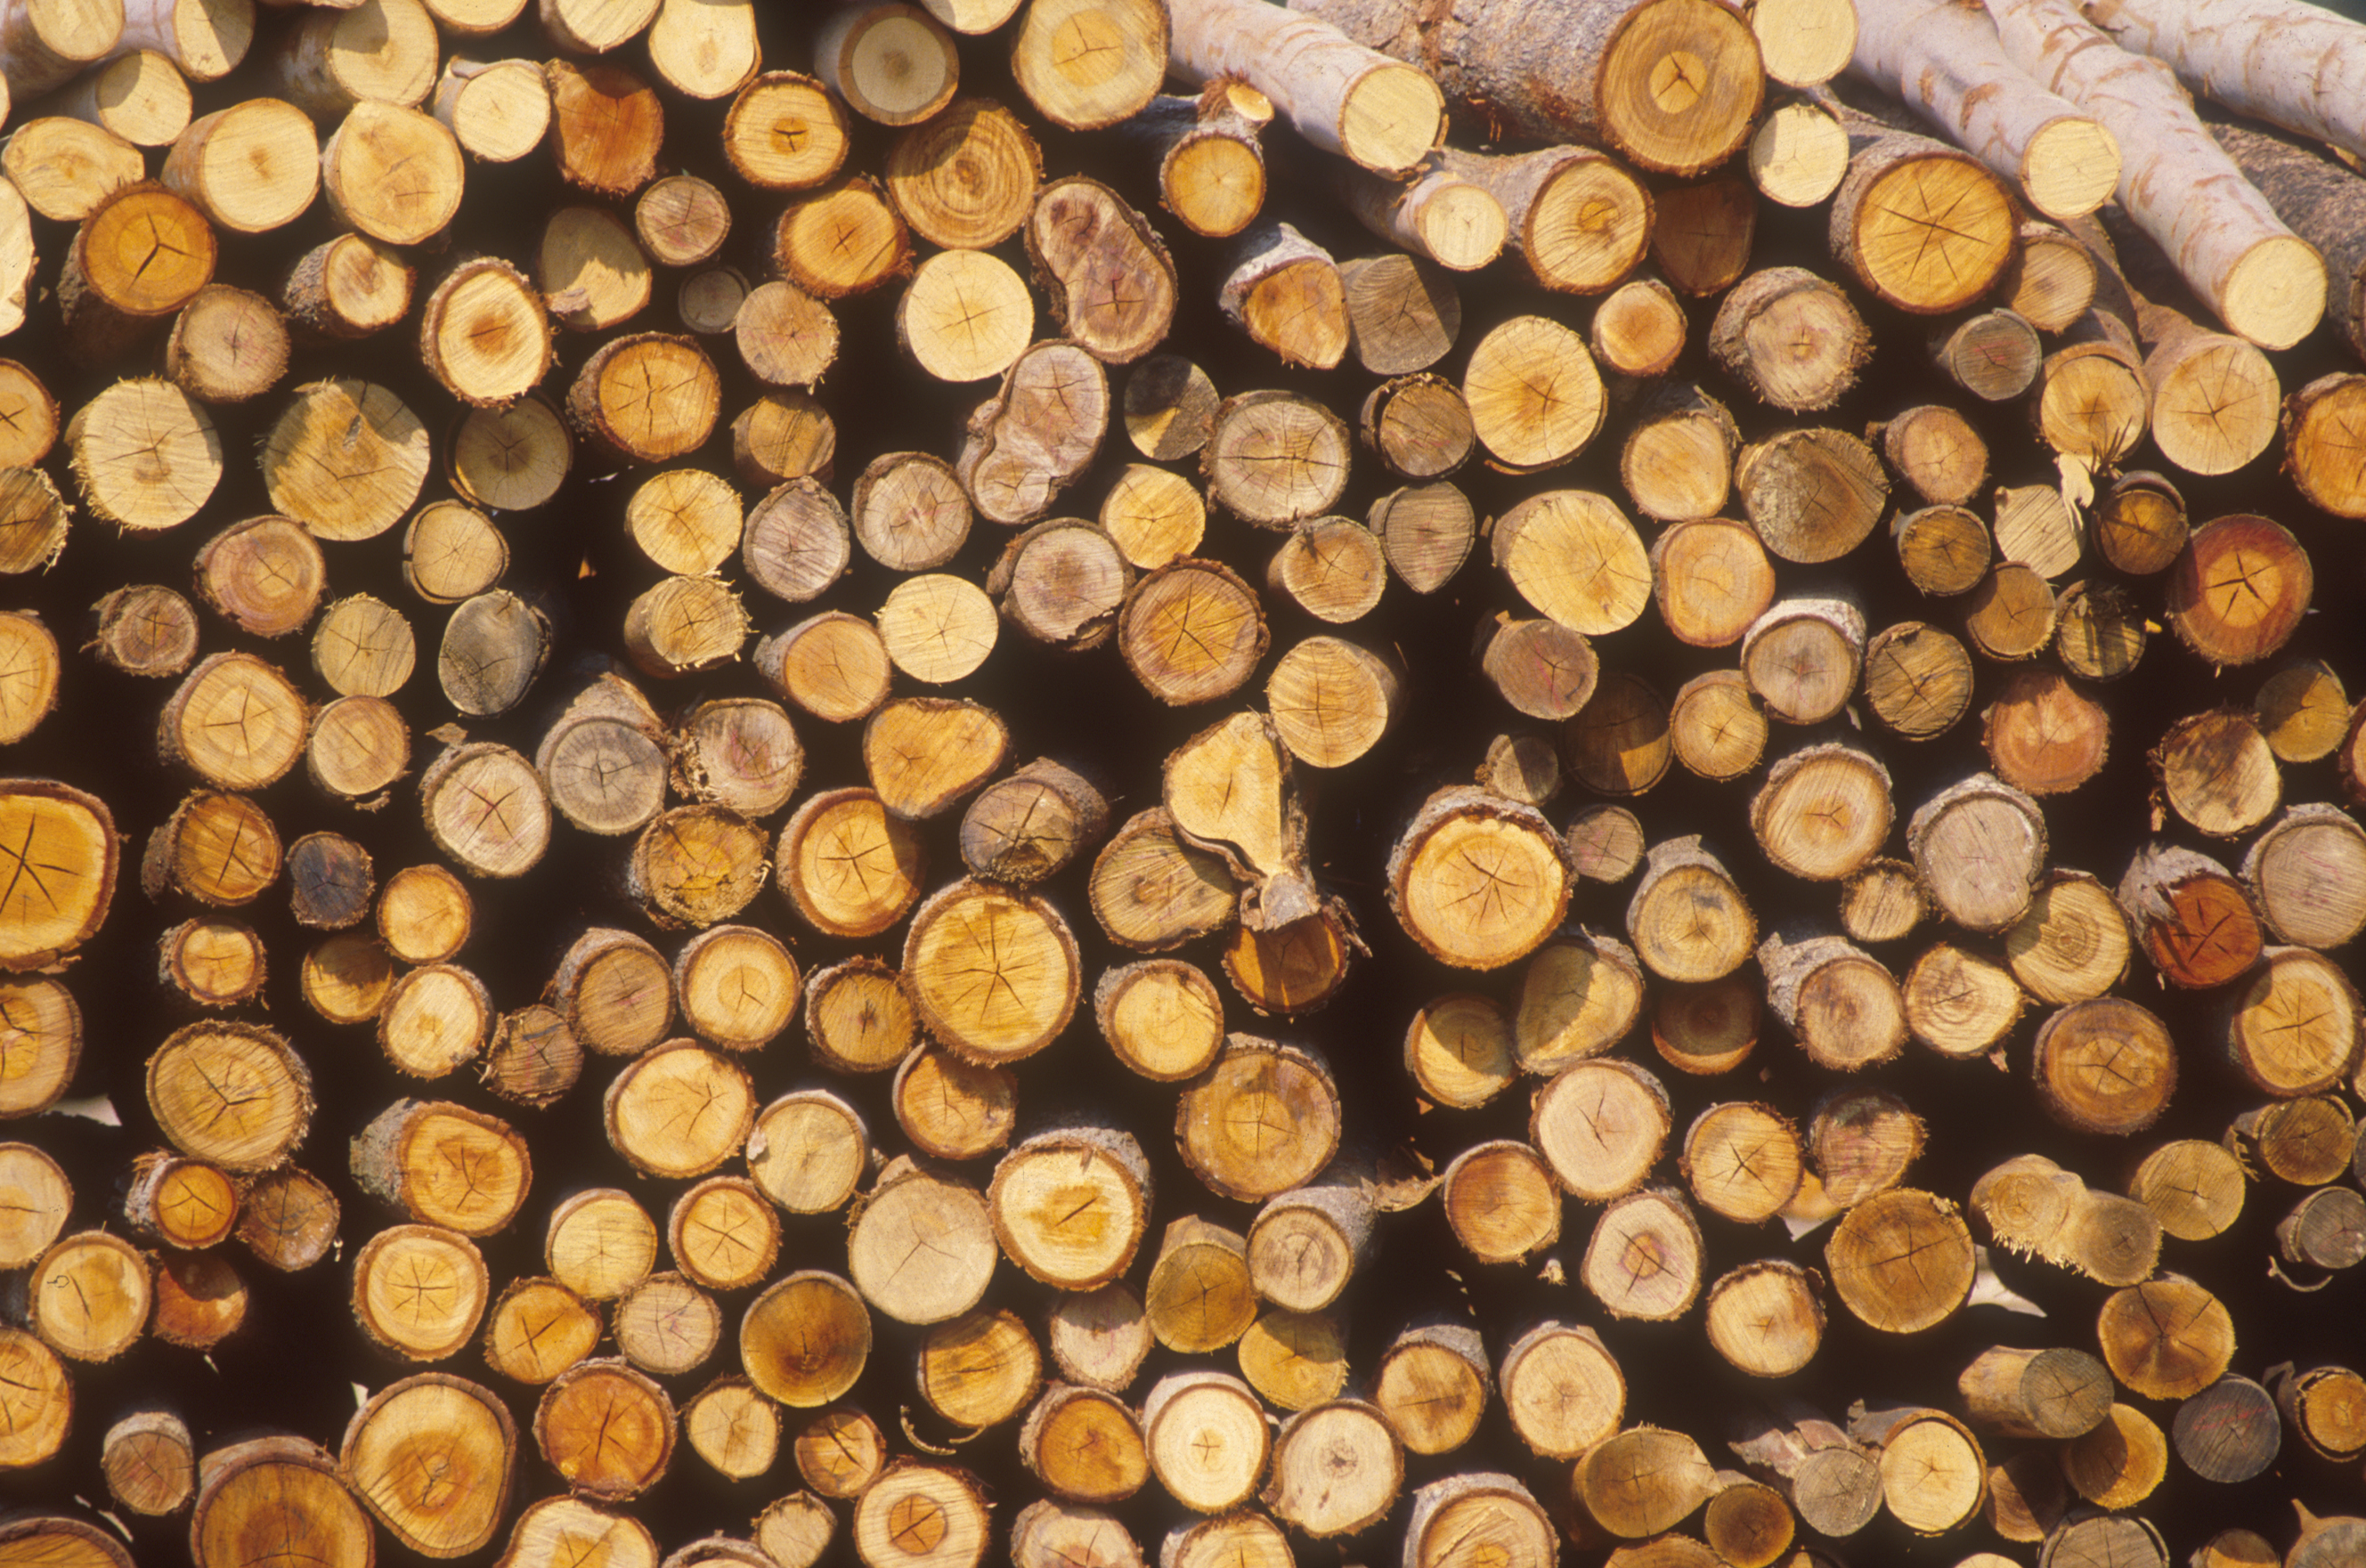 File:CSIRO ScienceImage 1725 Wood pile.jpg - Wikimedia Commons